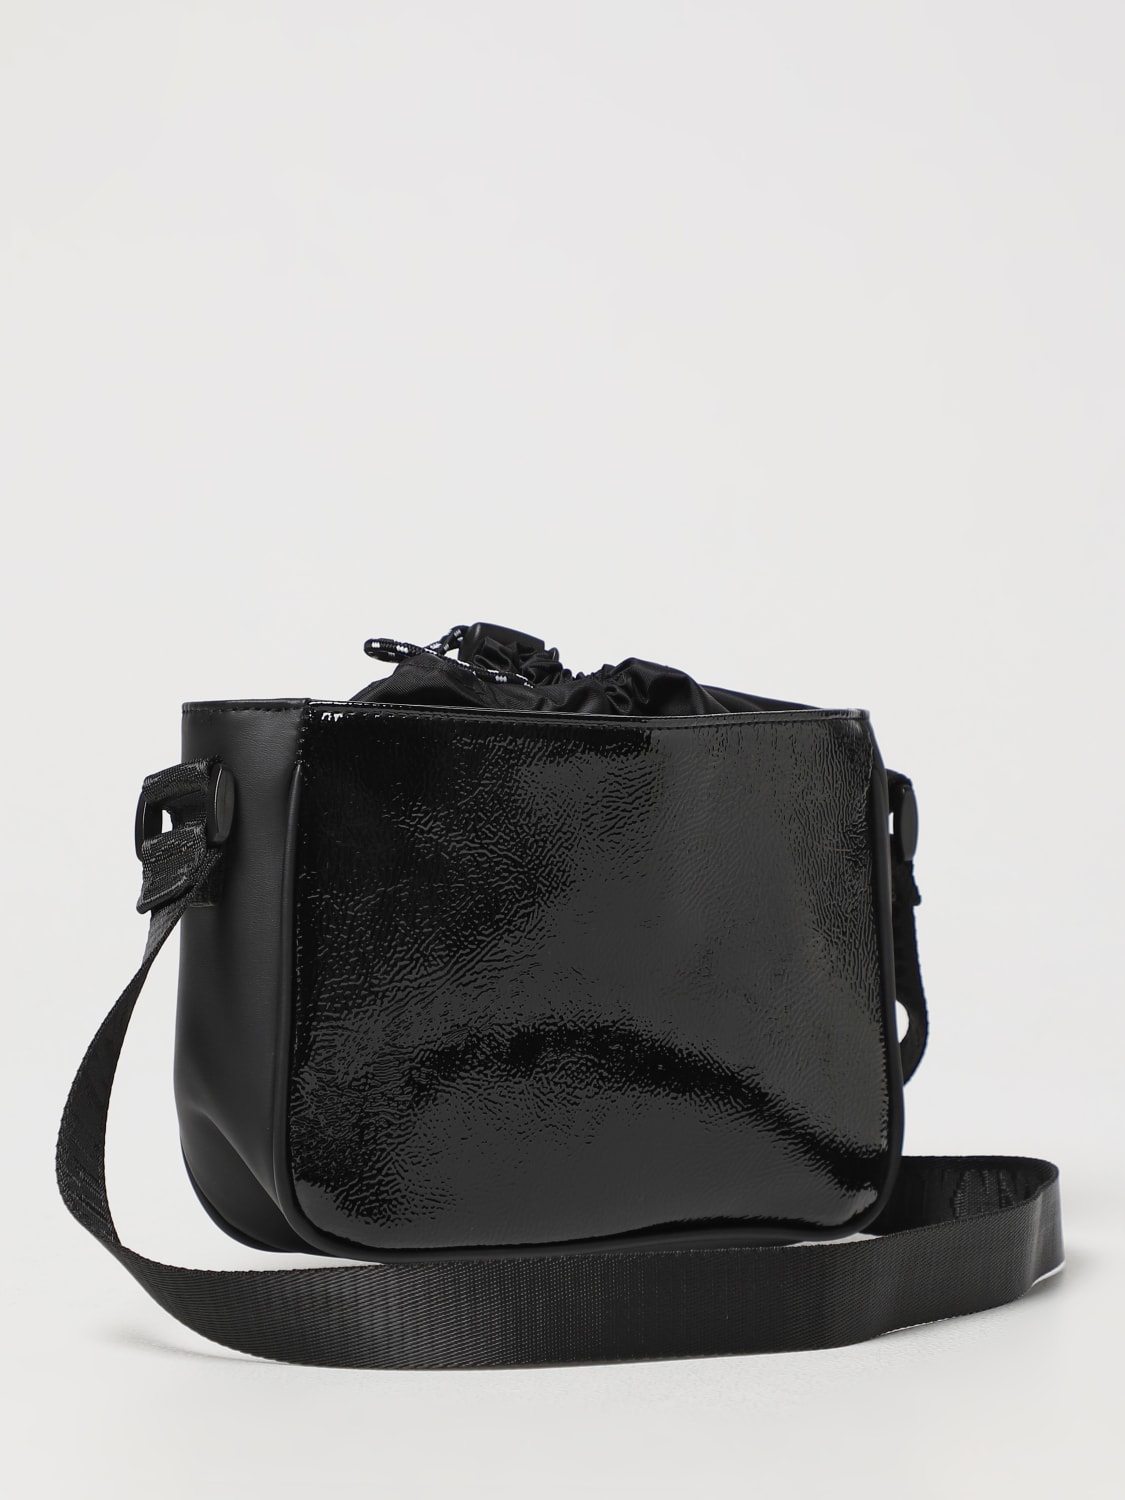 Dkny Handbags for Women - Vestiaire Collective